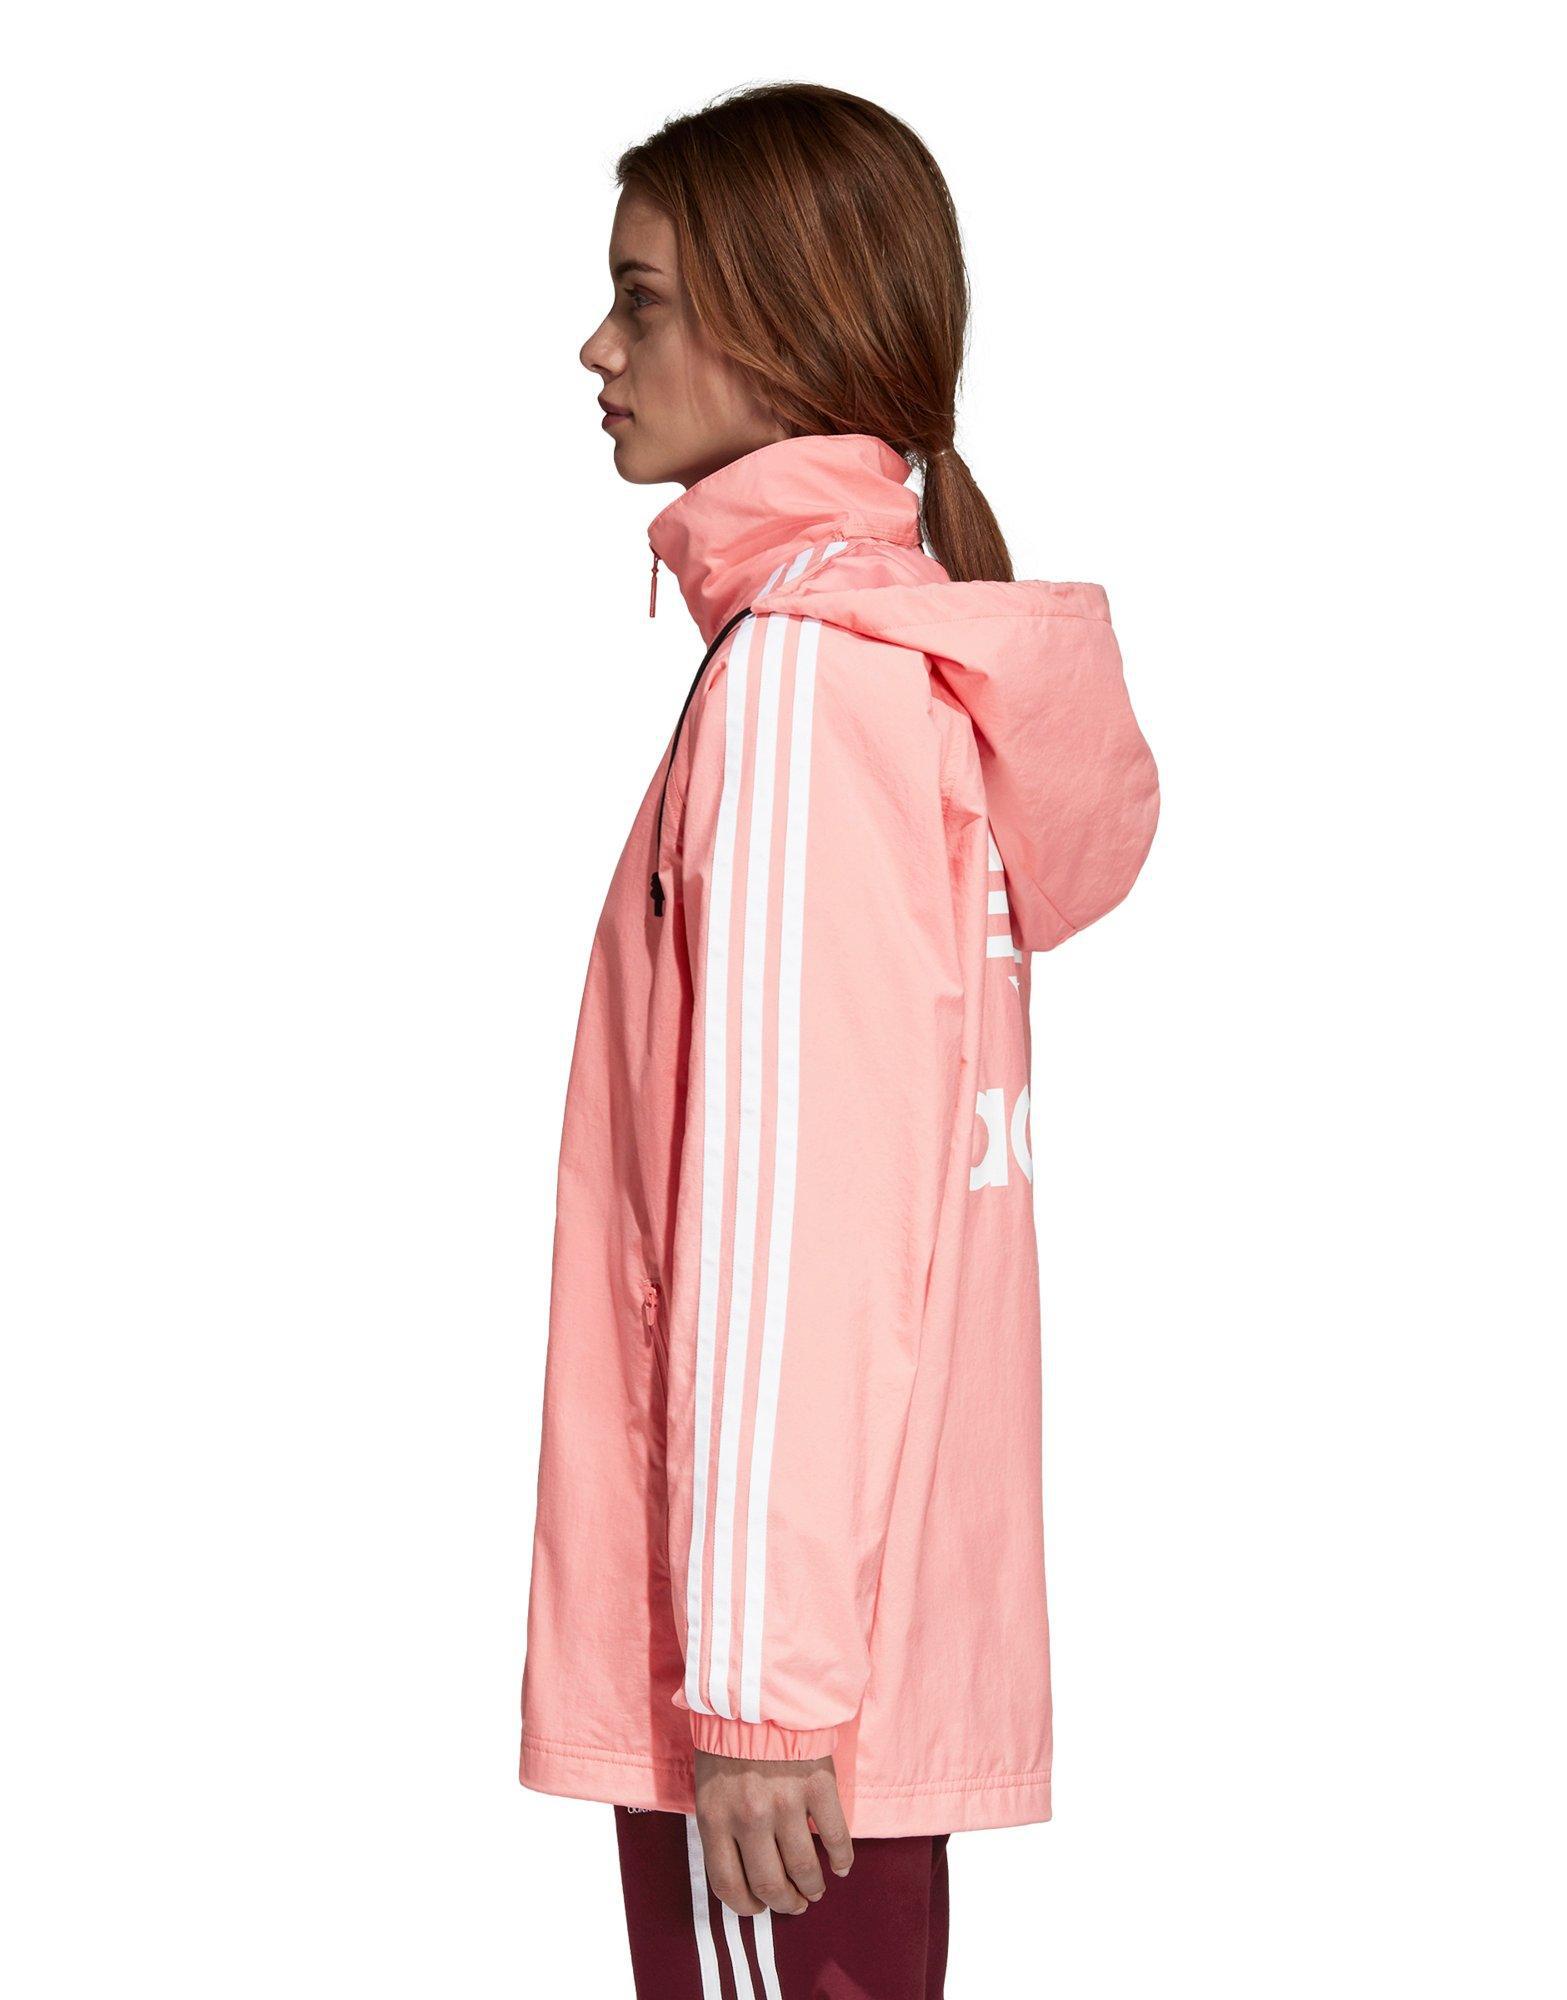 adidas stadium jacket pink